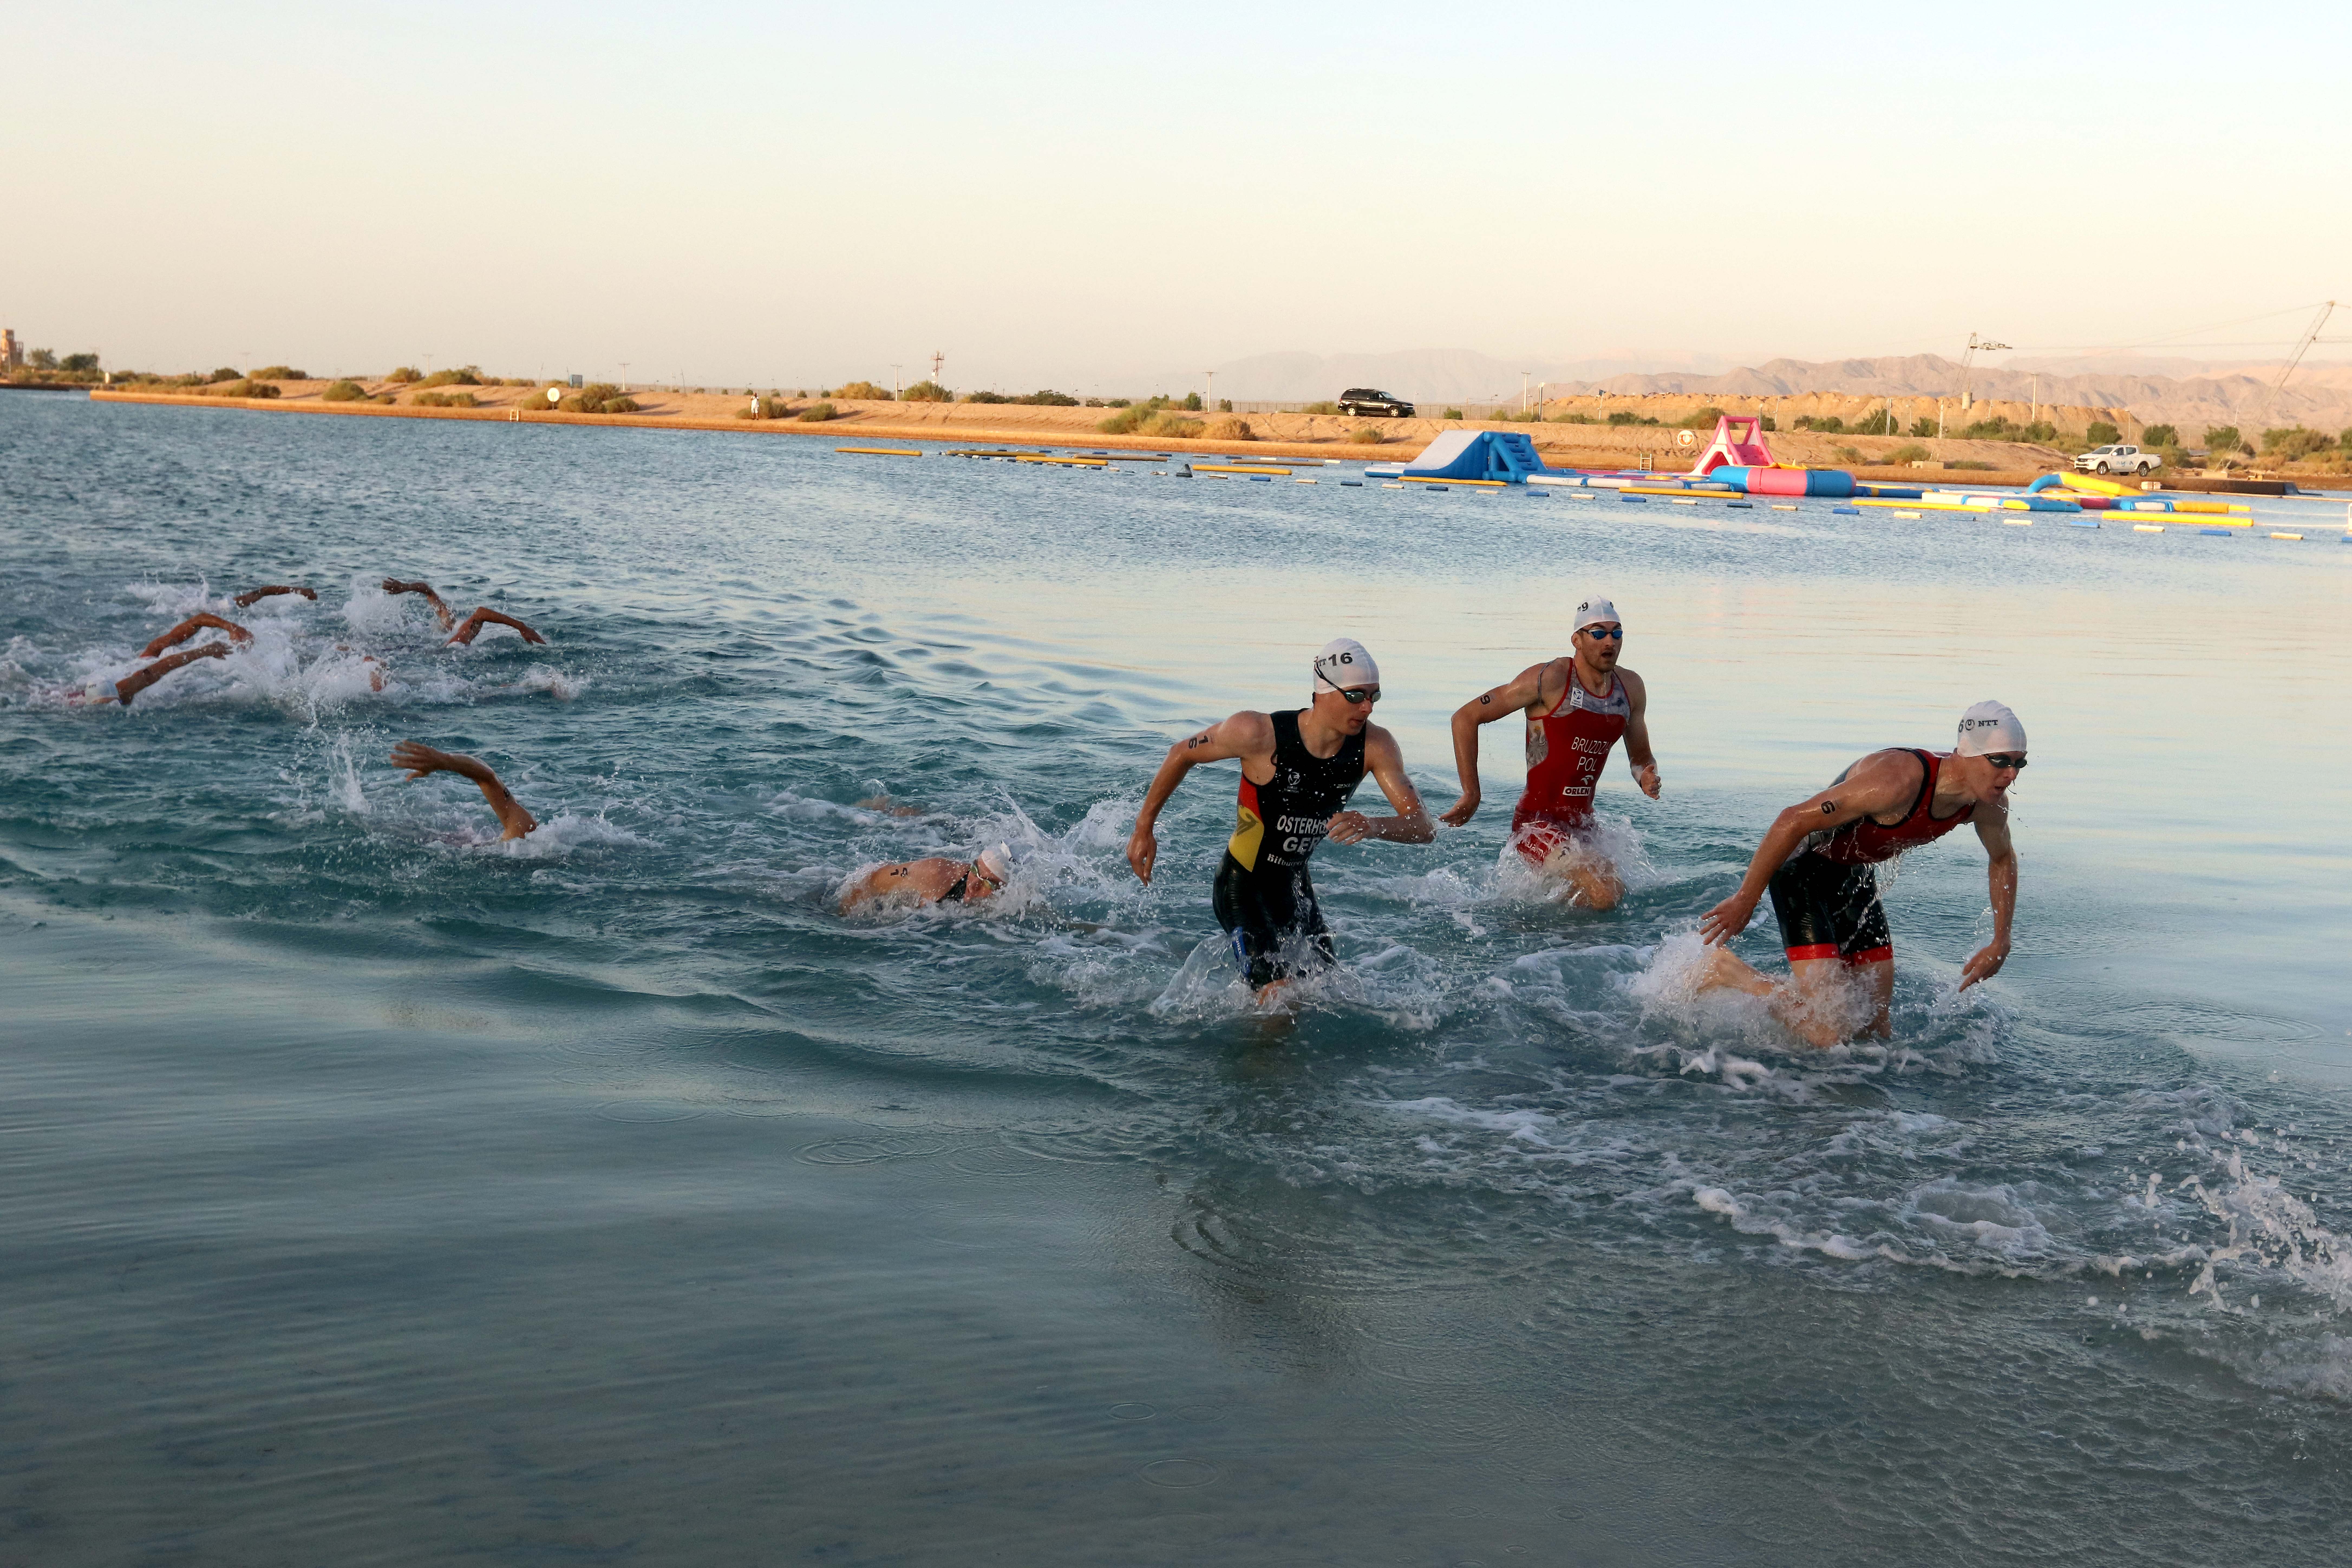 AQABA, Para atlet berkompetisi dalam nomor renang pada ajang Asia Triathlon Cup Aqaba 2022 di kota pelabuhan Aqaba, Yordania selatan, pada 1 Oktober 2022. (Xinhua/Mohammad Abu Ghosh)